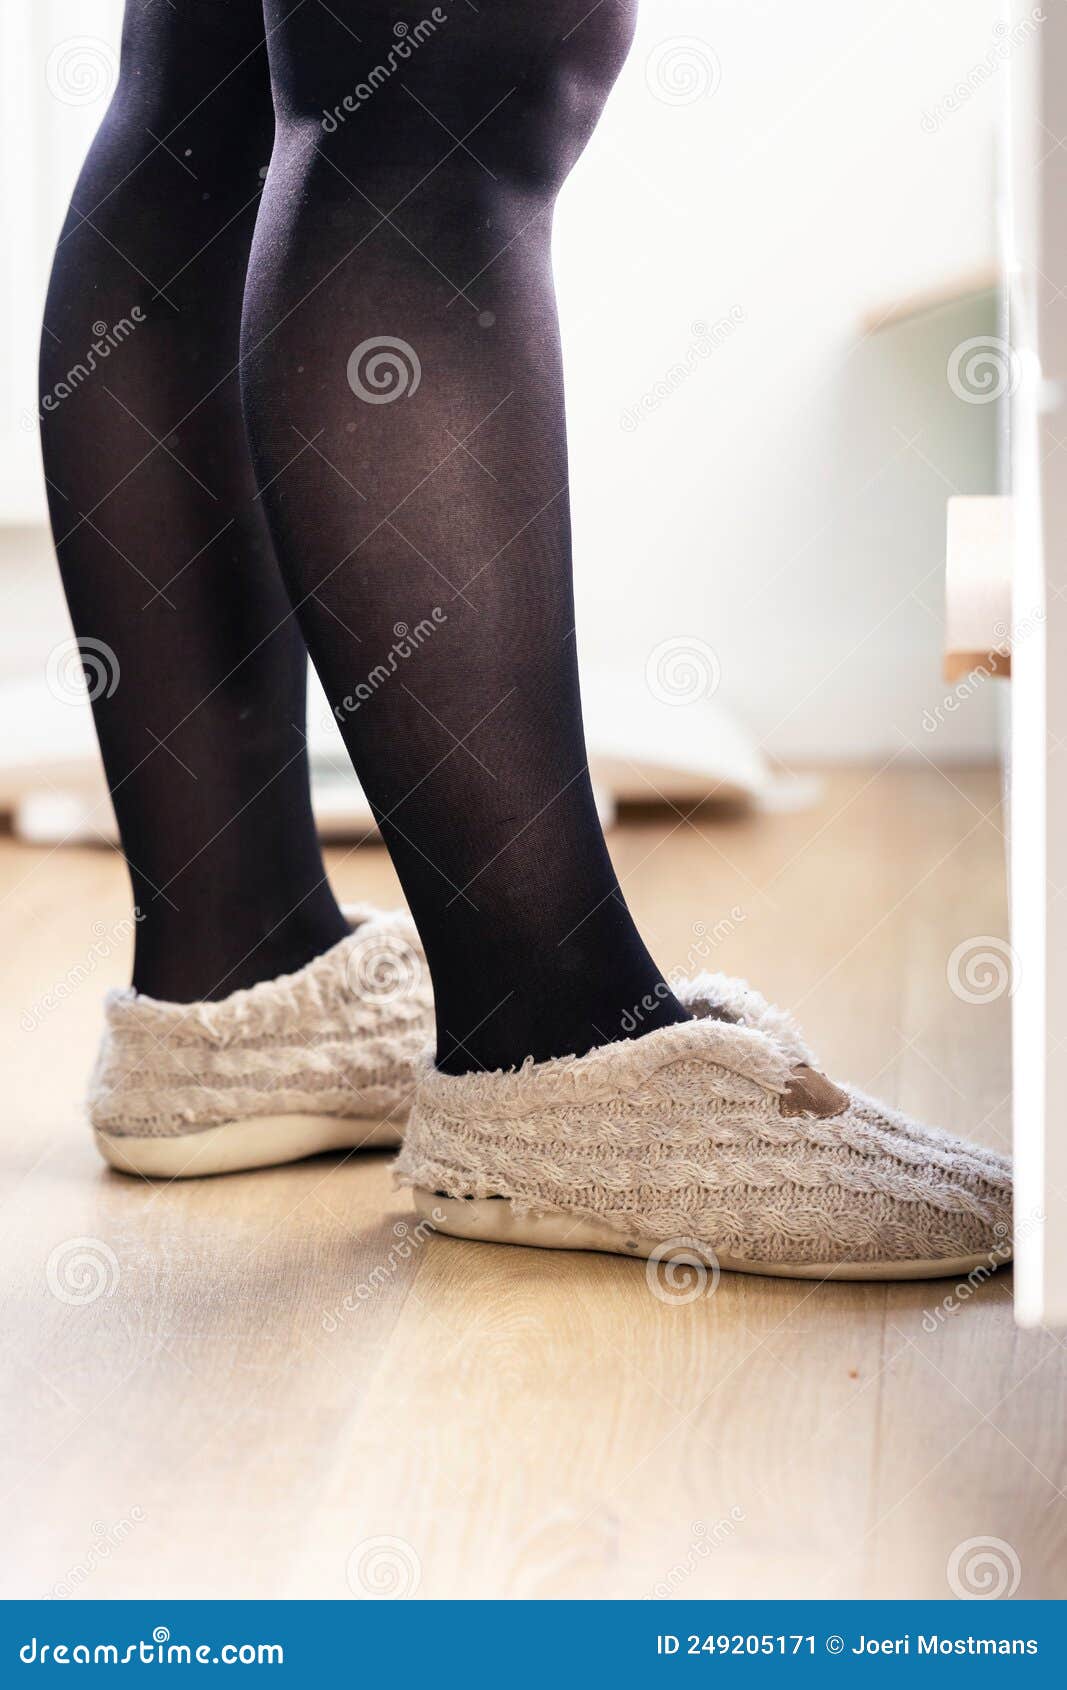 https://thumbs.dreamstime.com/z/portrait-female-legs-covered-black-nylon-stockings-pantyhose-wearing-slippers-mules-feet-standing-indoors-249205171.jpg